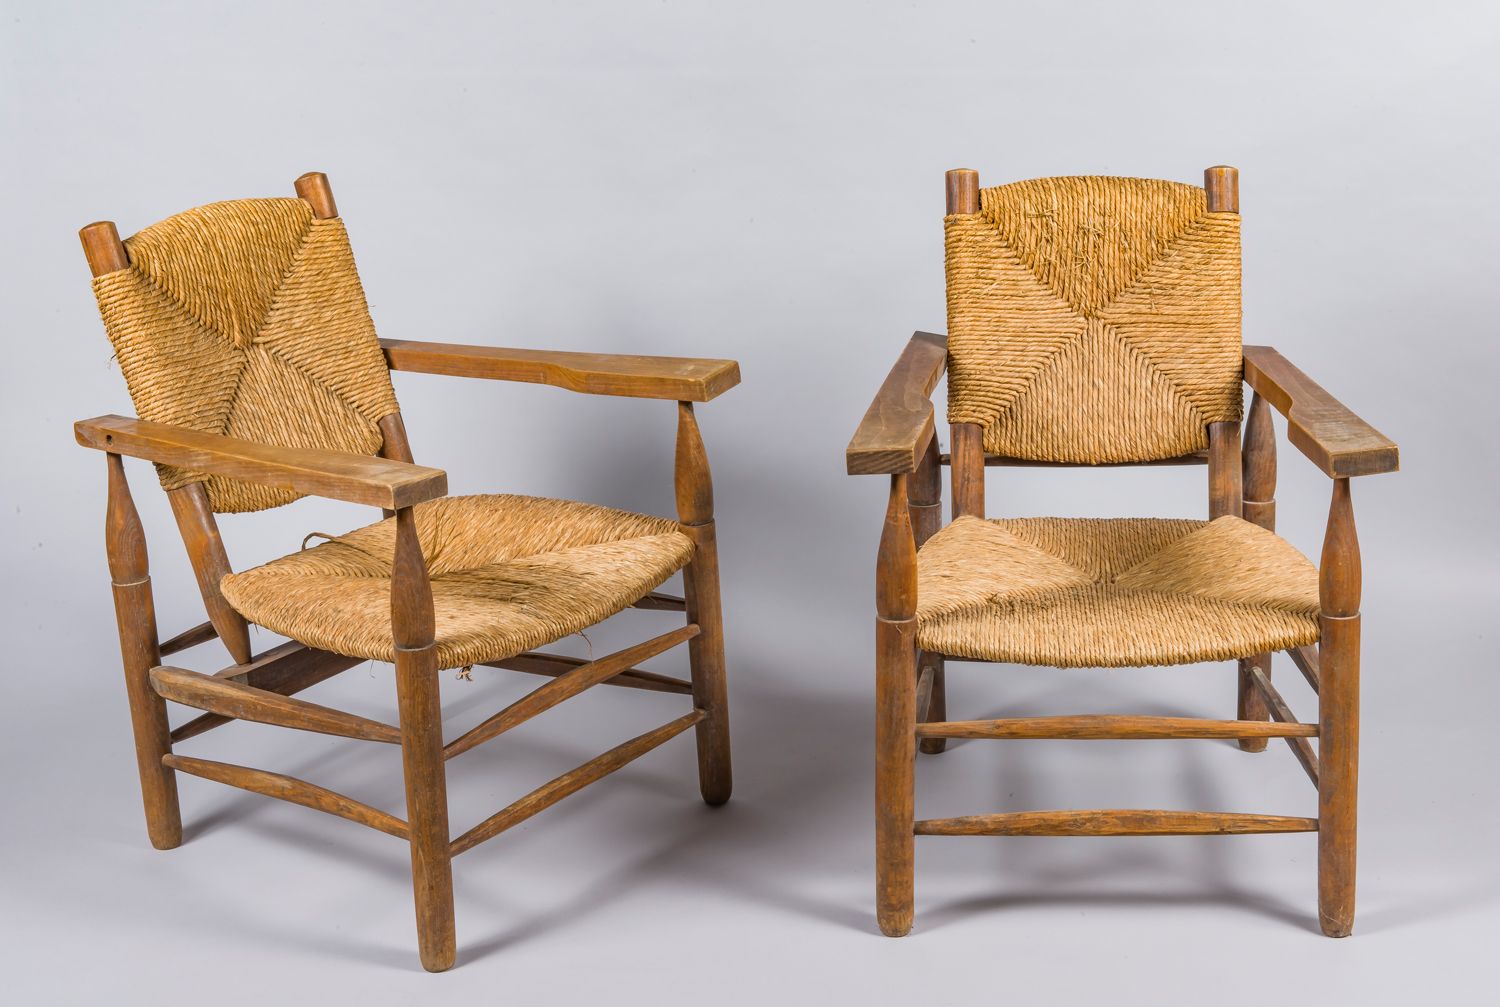 Null 皮埃尔-耶纳雷(1896-1967)
一对橡木和稻草 "paillés "扶手椅，模型创作于1943年
82 x 61 x 61厘米
其中一个扶手椅上&hellip;